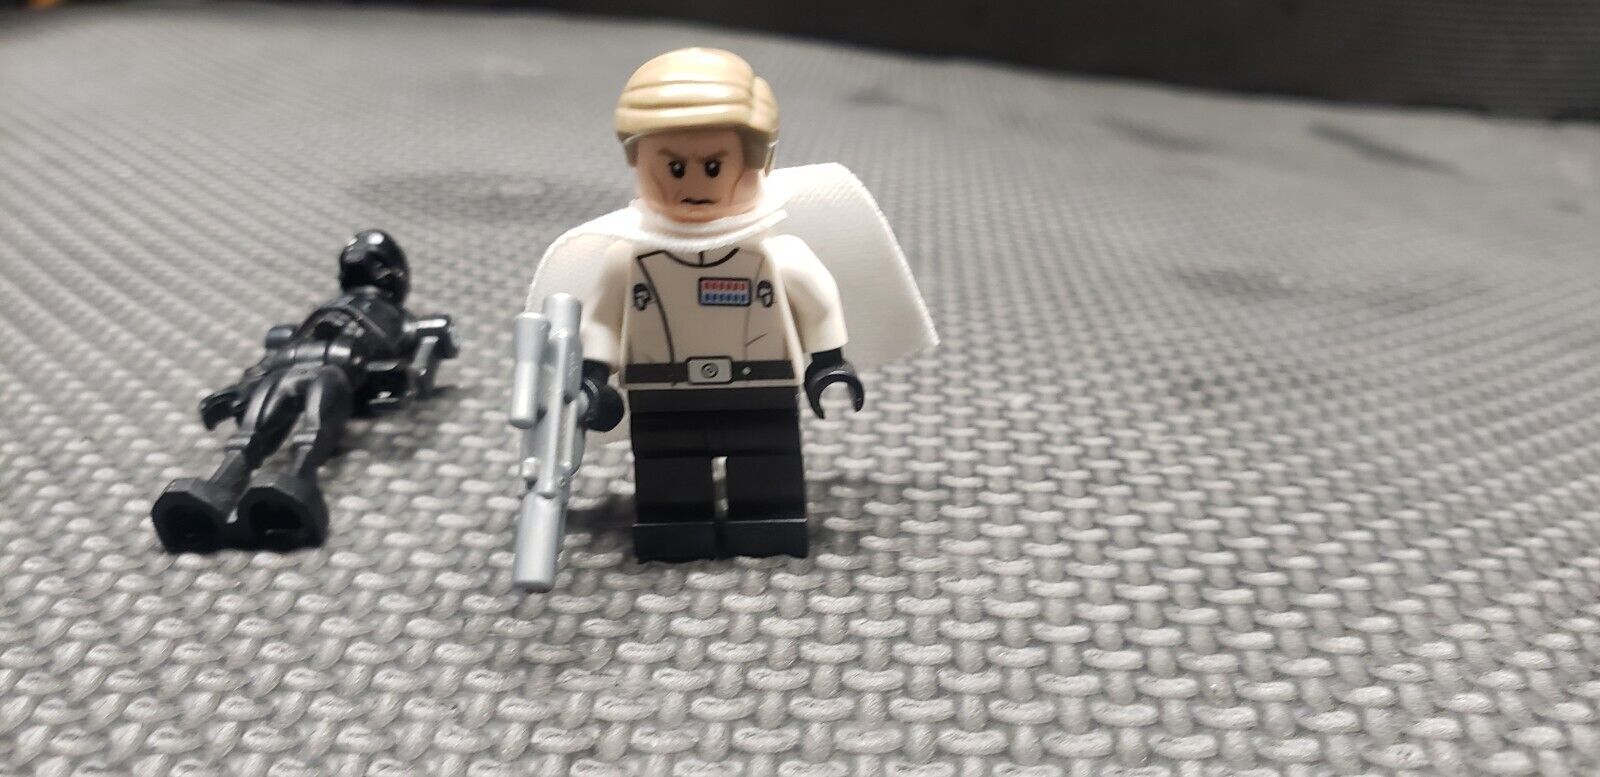 Lego Star Wars  Director Krennic And K-2so  Minifigures